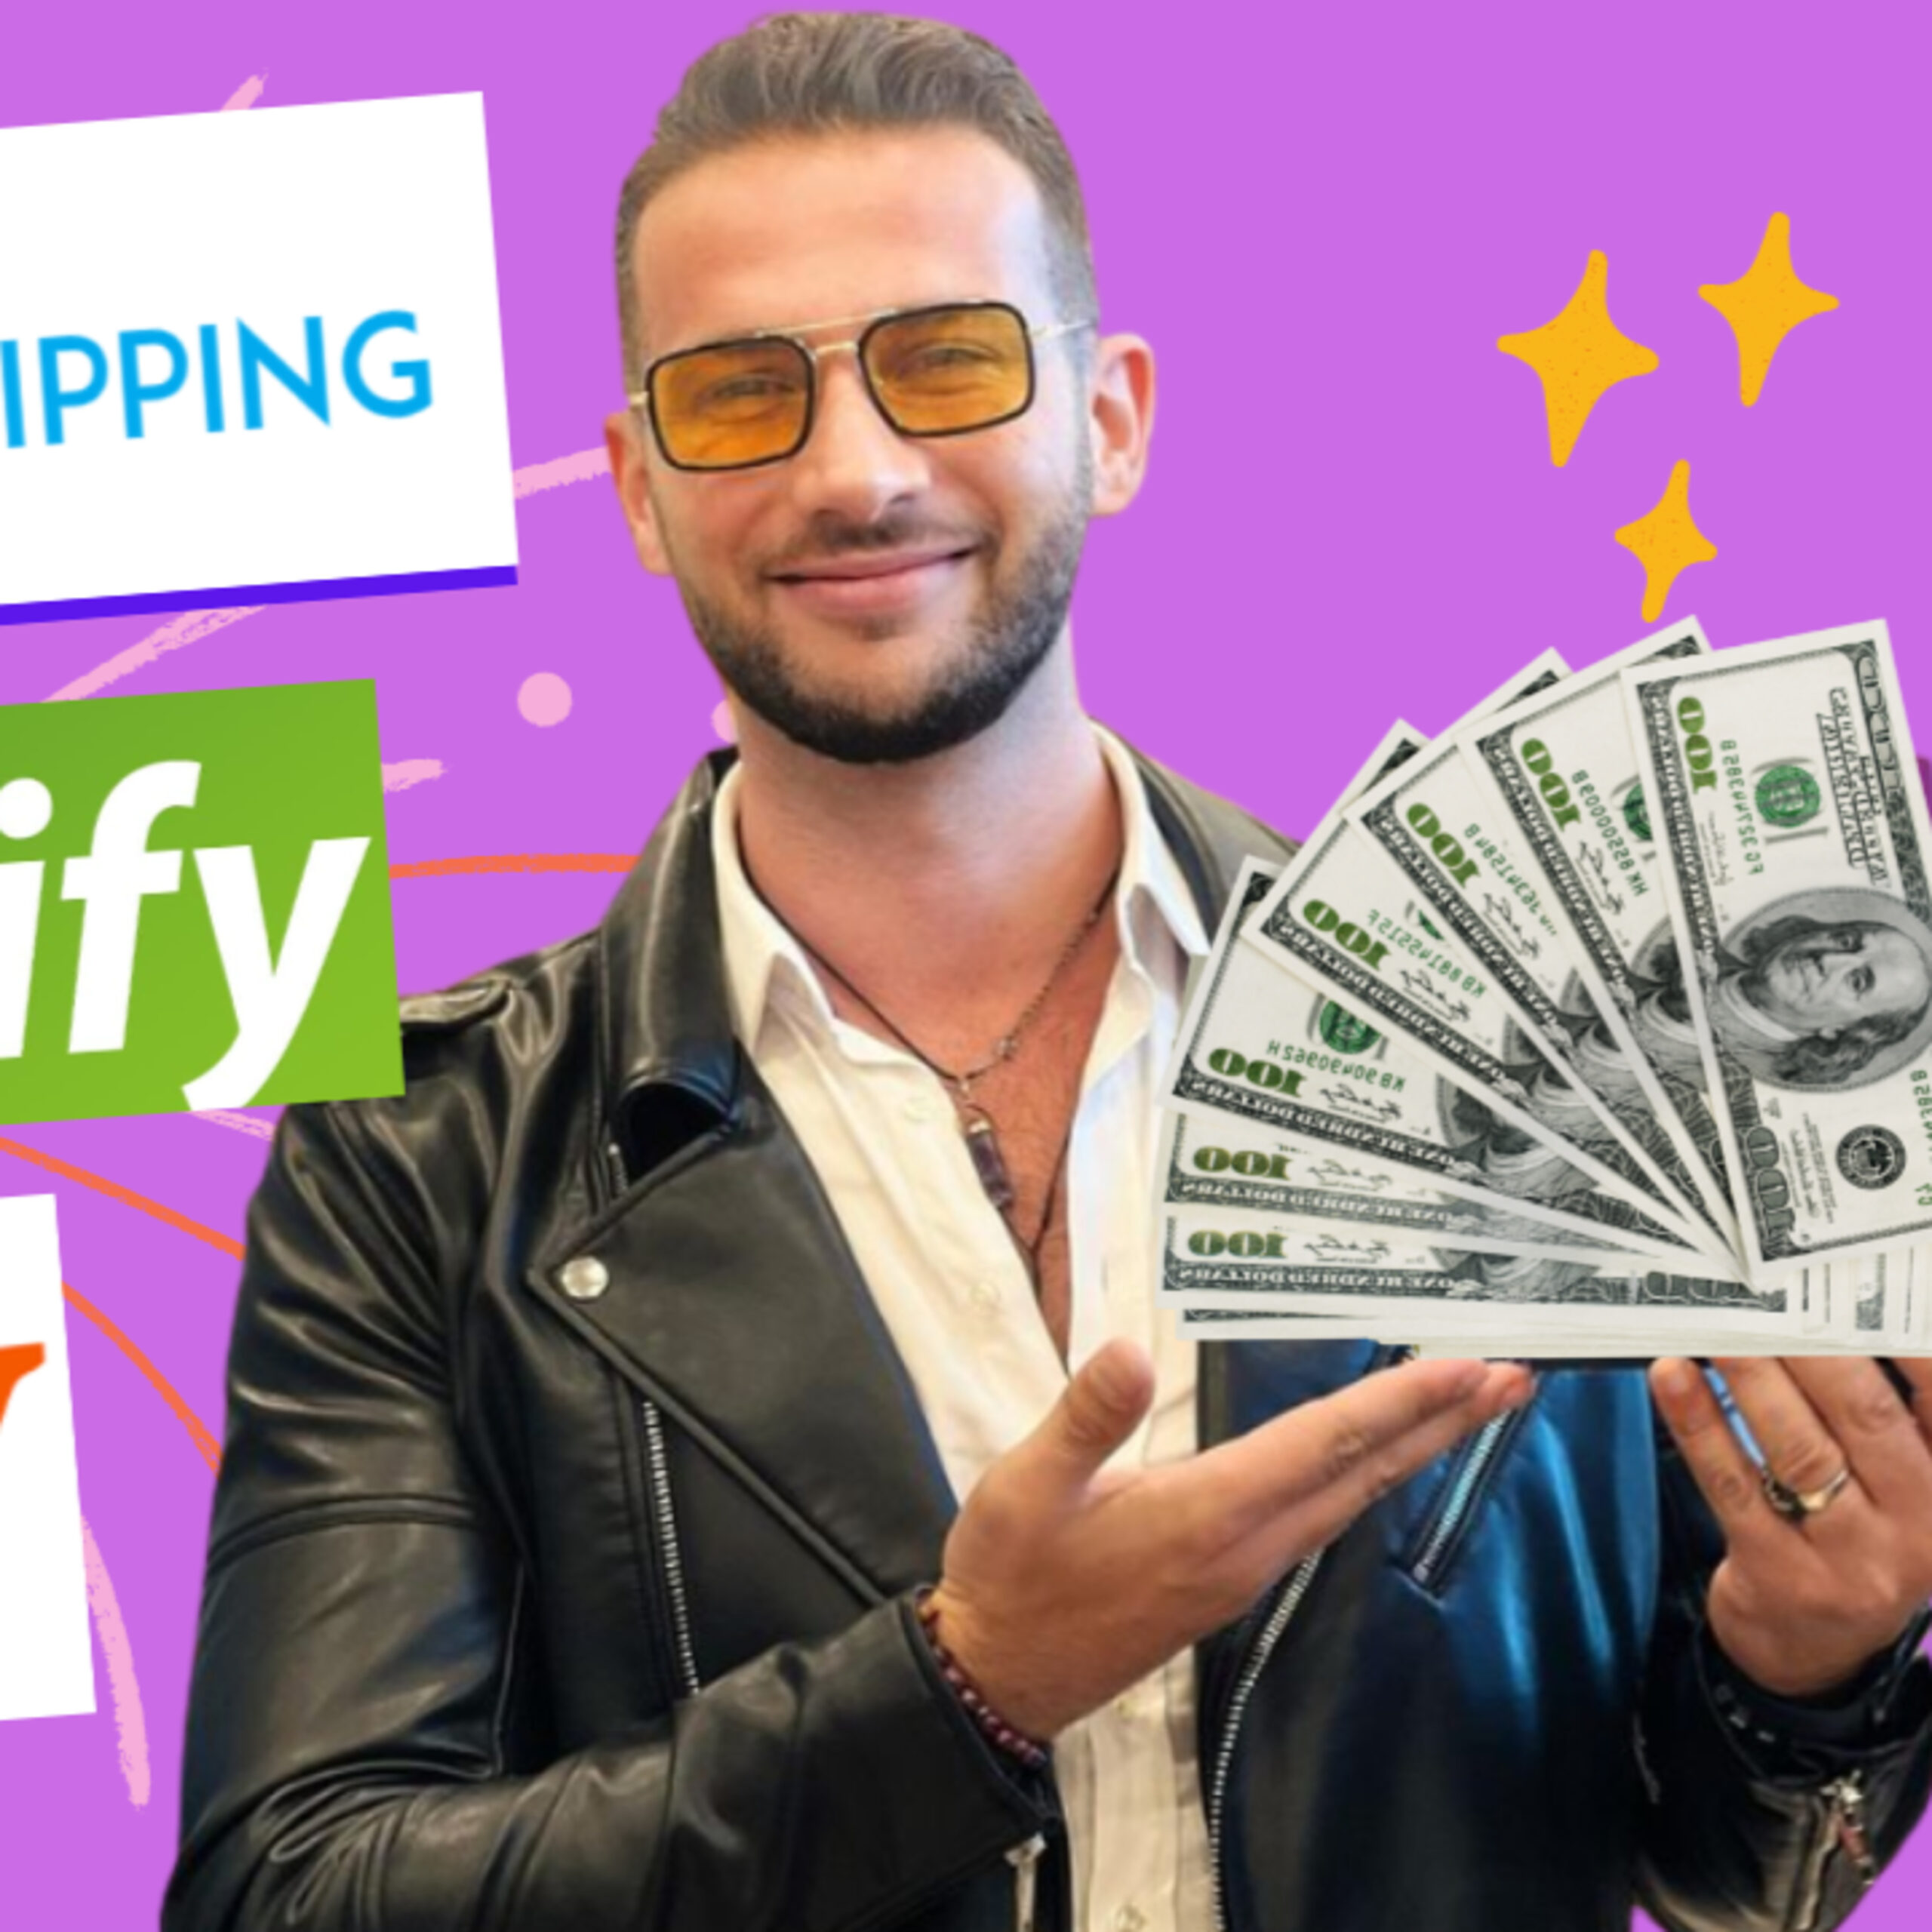 My Podcast Shopify Mağazası Açma, CJ Dropshipping Stoksuz Satış Hesabı Kurma ve Etsy ile Para Kazanma #godaddy